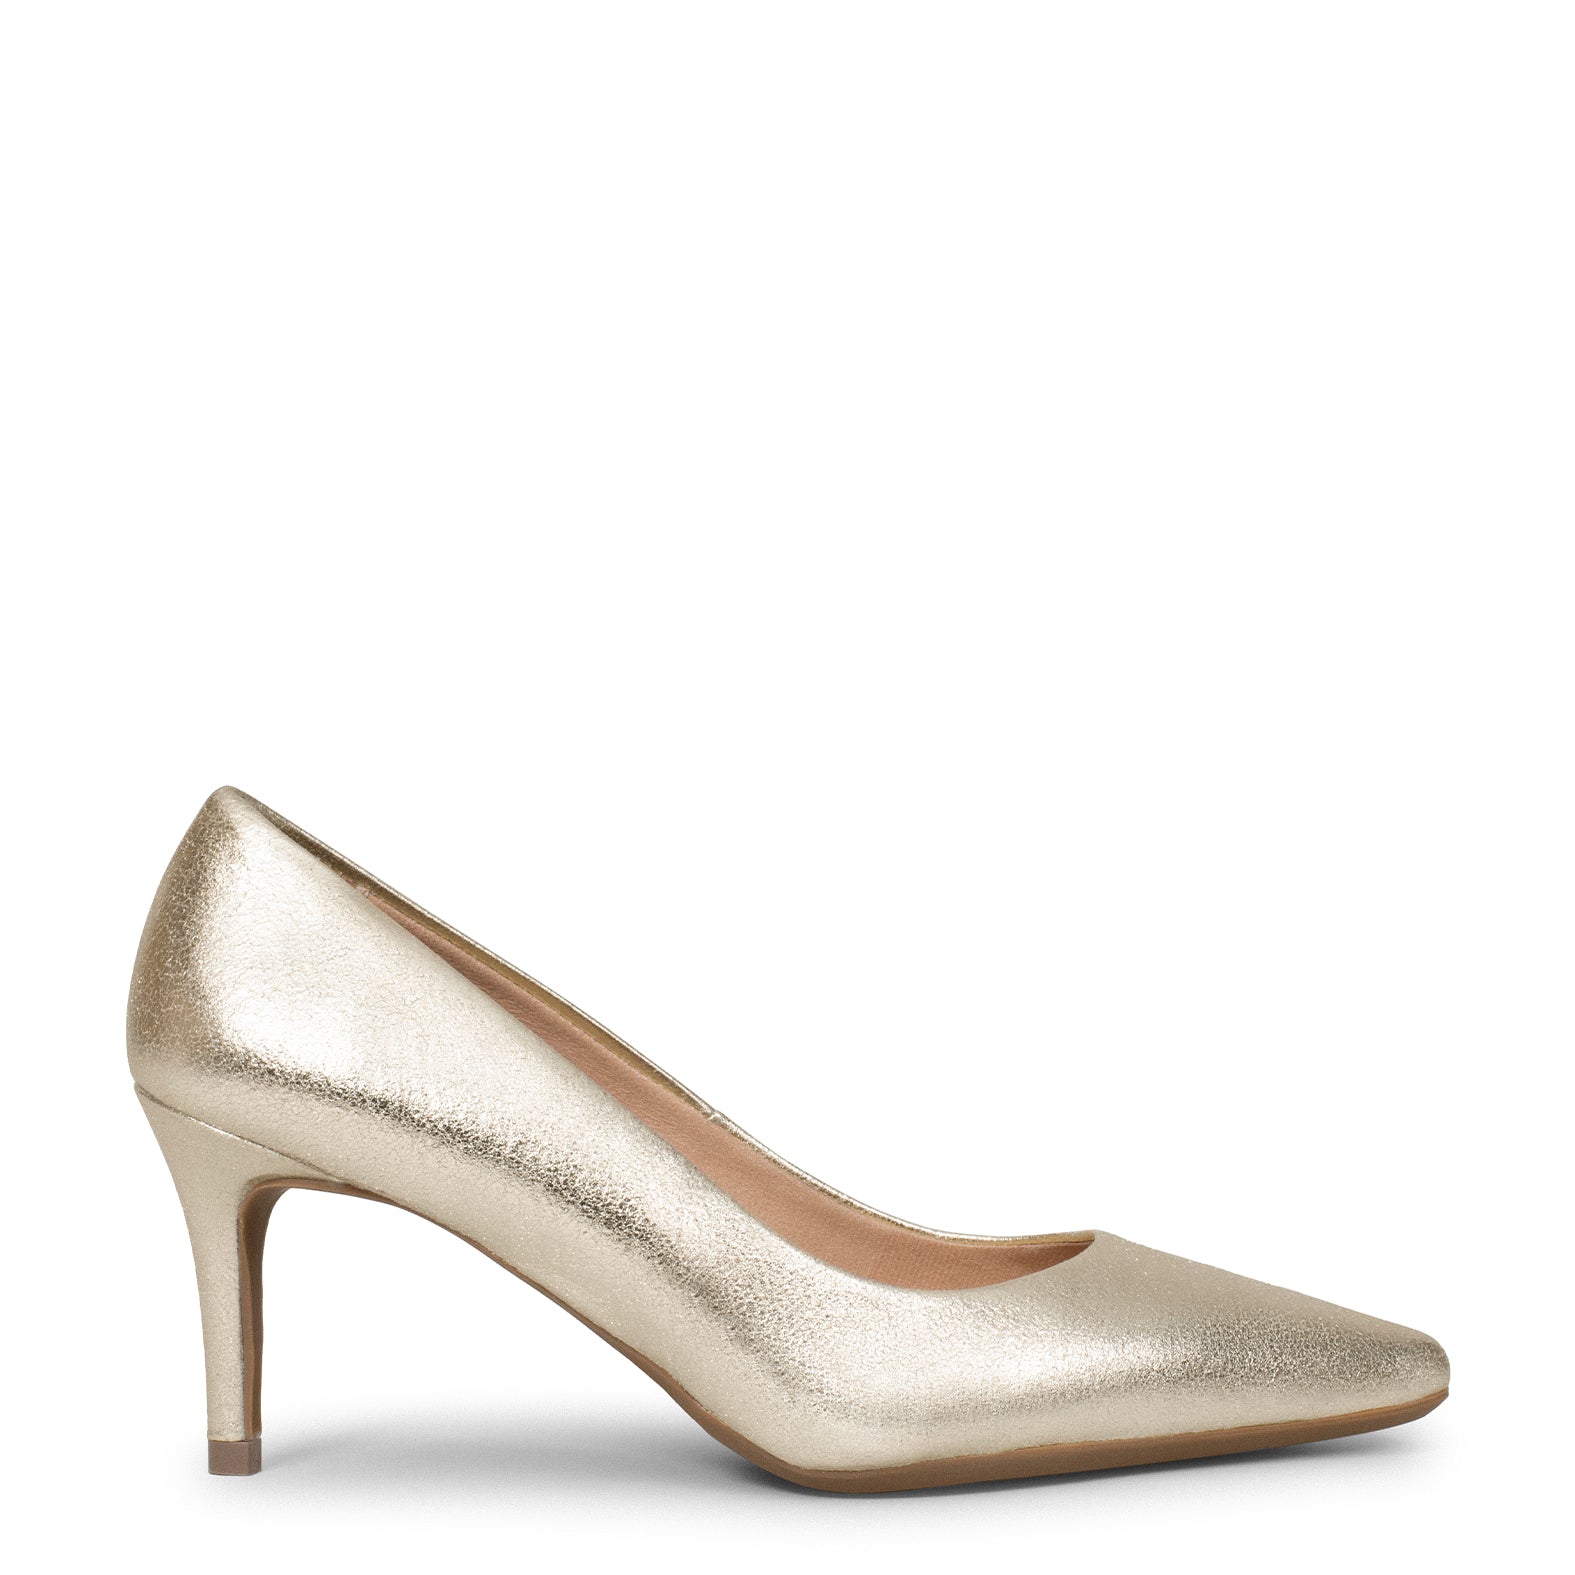 STILETTO SPLASH – GOLDEN metallic leather stilettos